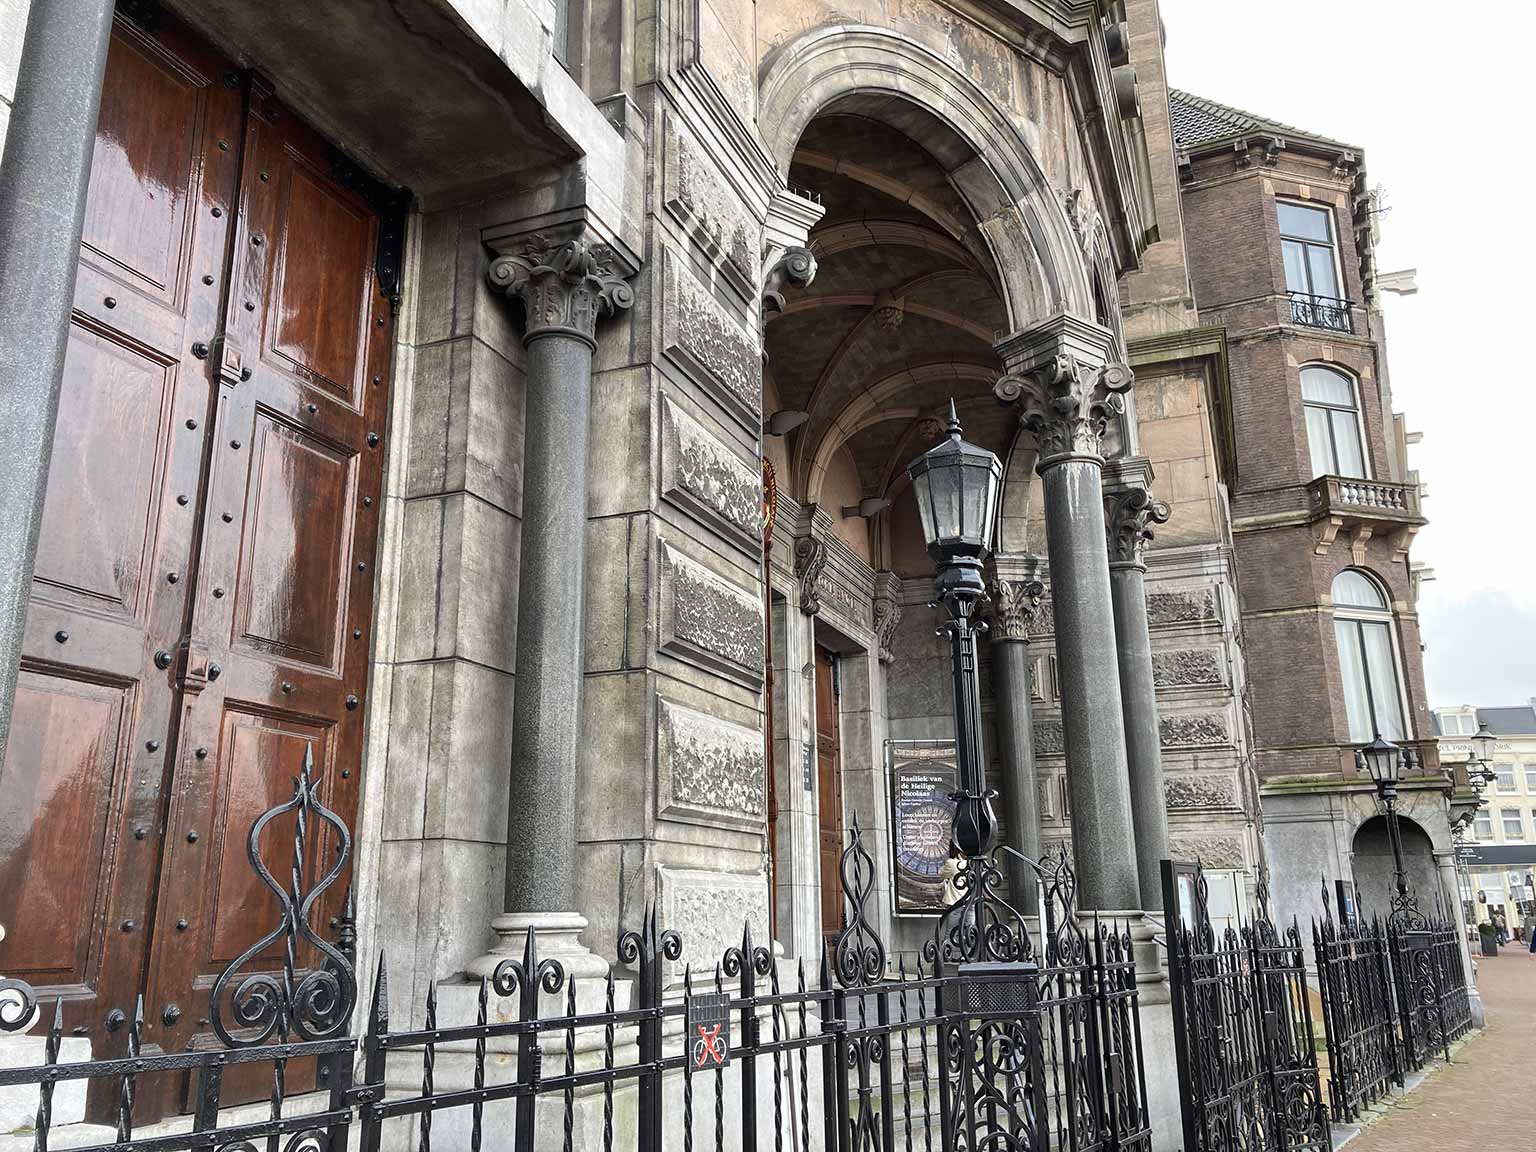 Ingang van de Sint Nicolaaskerk, Amsterdam, aan de Prins Hendrikkade